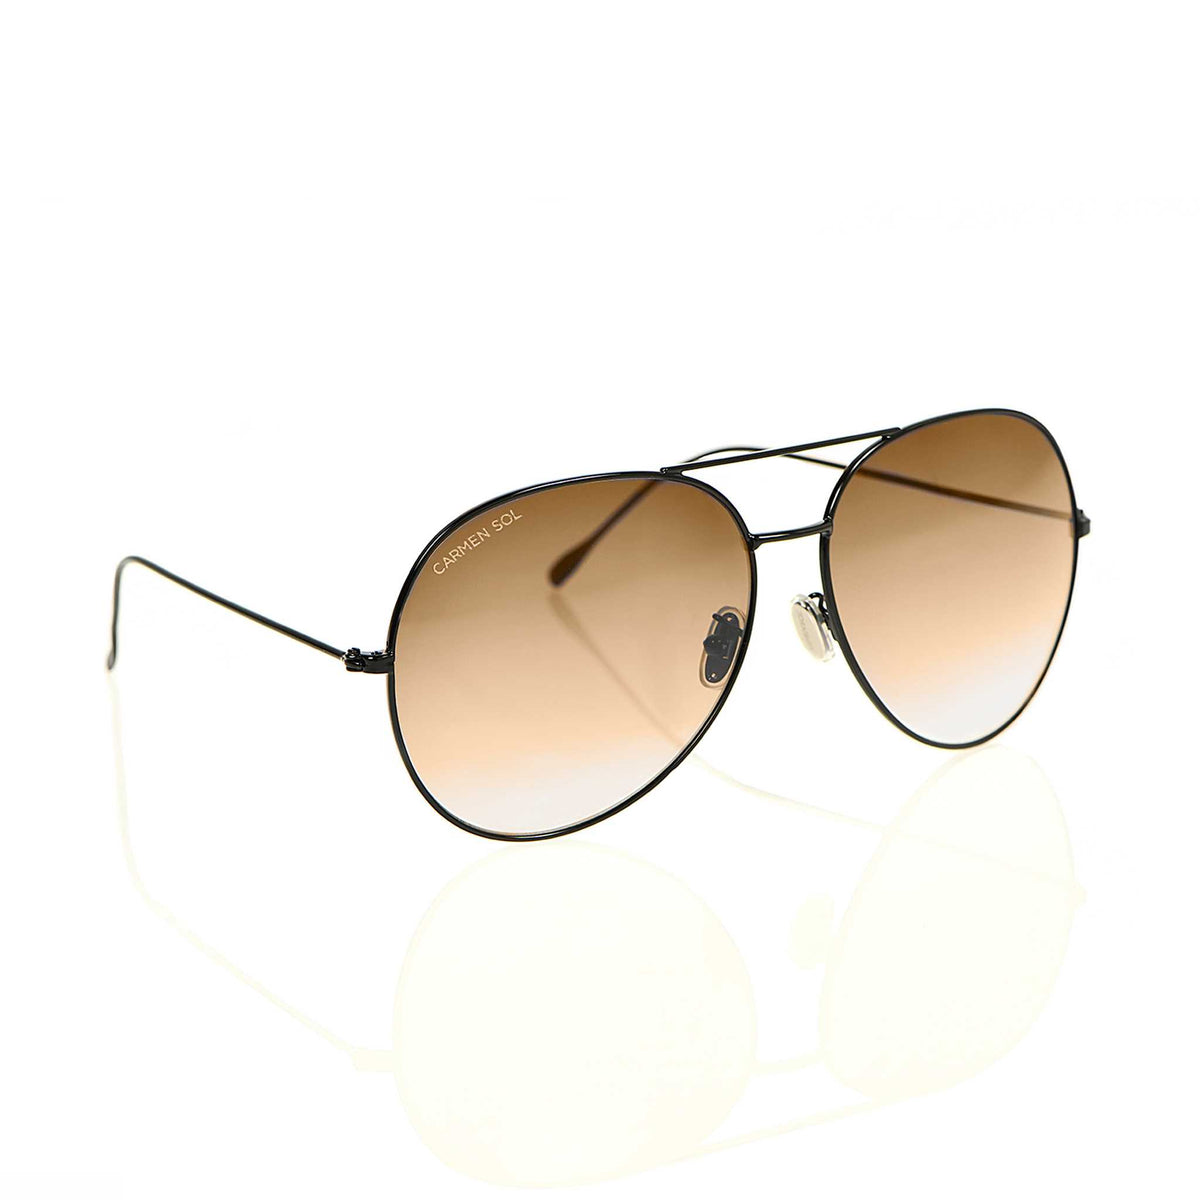 Brown aviator sunglasses for women and for men